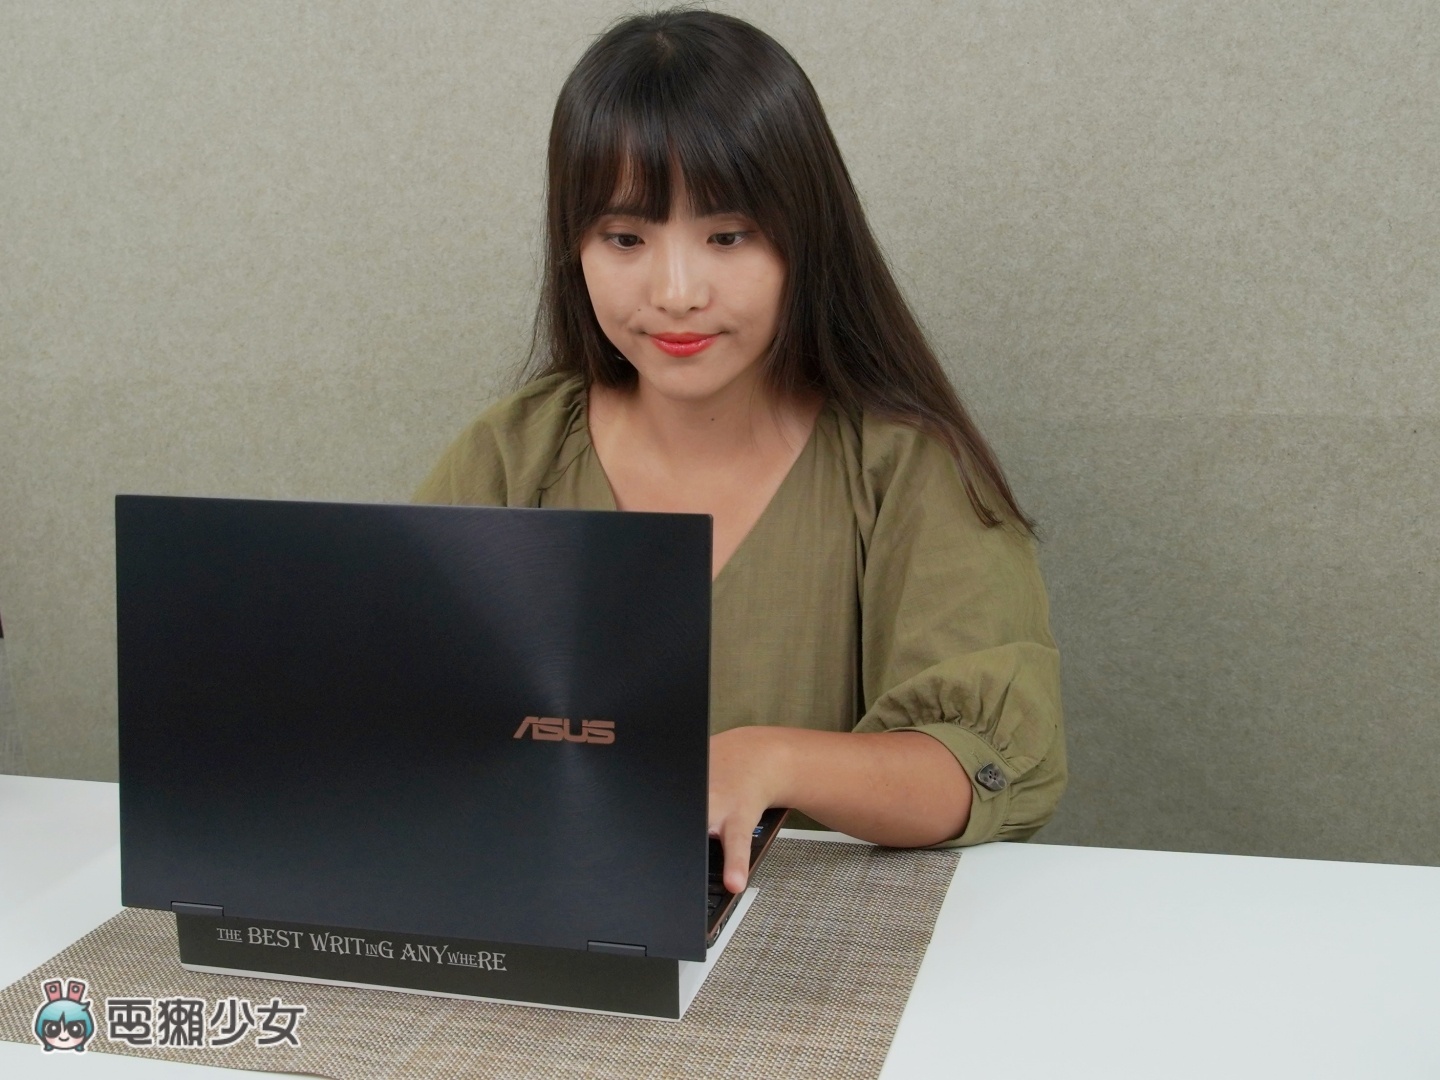 開箱｜一機四用！ASUS ZenBook Flip S（UX371）搭載第 11 代 Intel 處理器，且配置 4K OLED HDR 觸控螢幕、67Wh 電池，360 度翻轉更實用